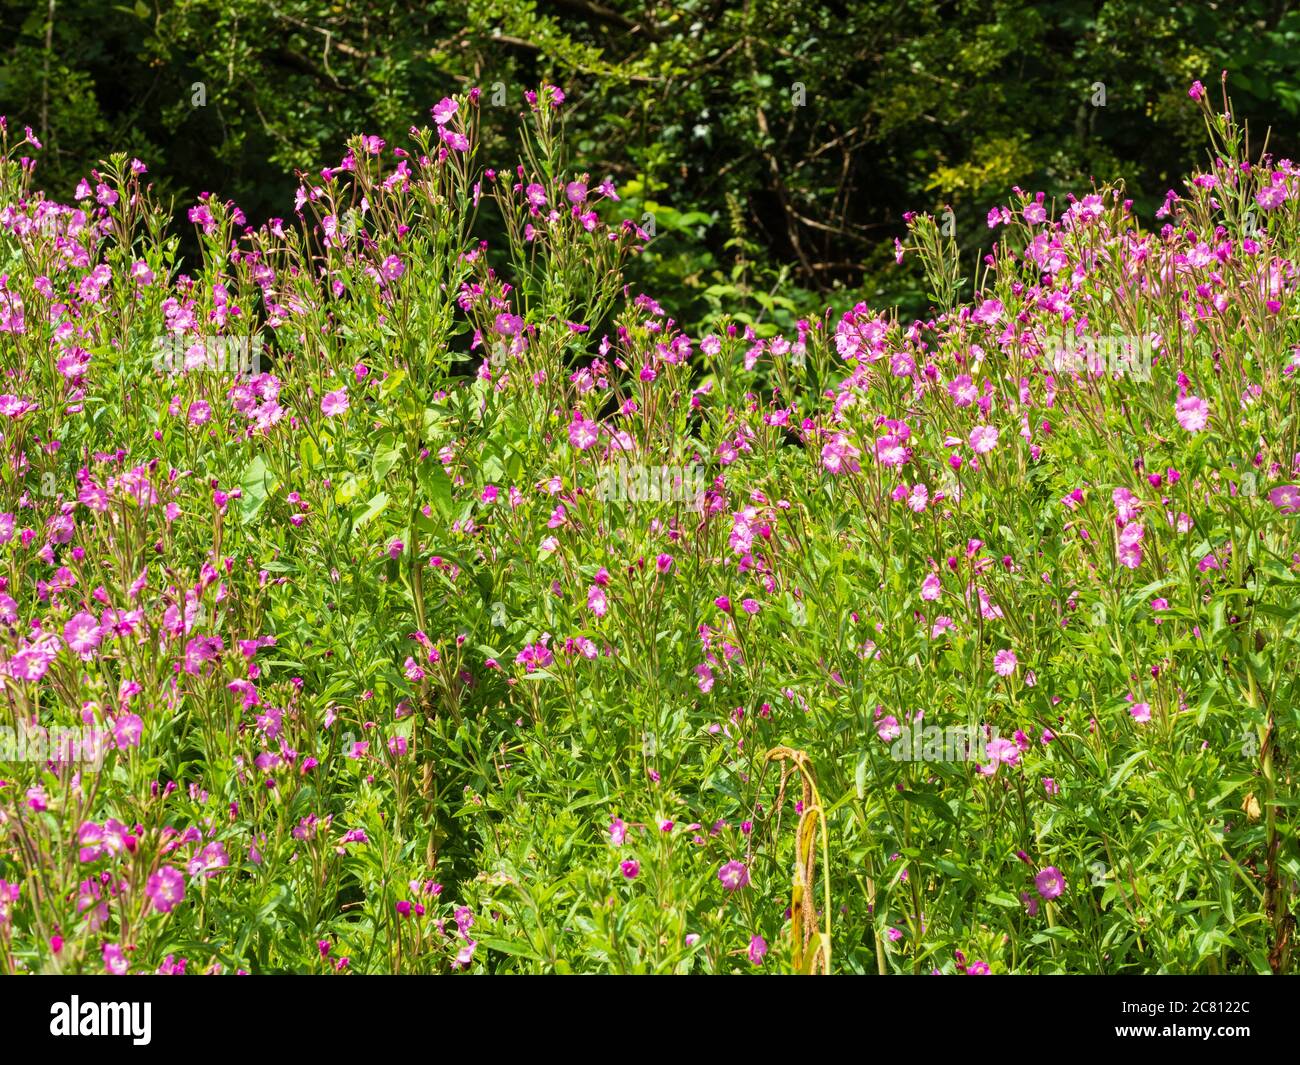 Massed flowers of the herbaceous perennial UK wildflower, Epilobium hirsutum, Great willowherb or Codlins and Cream Stock Photo